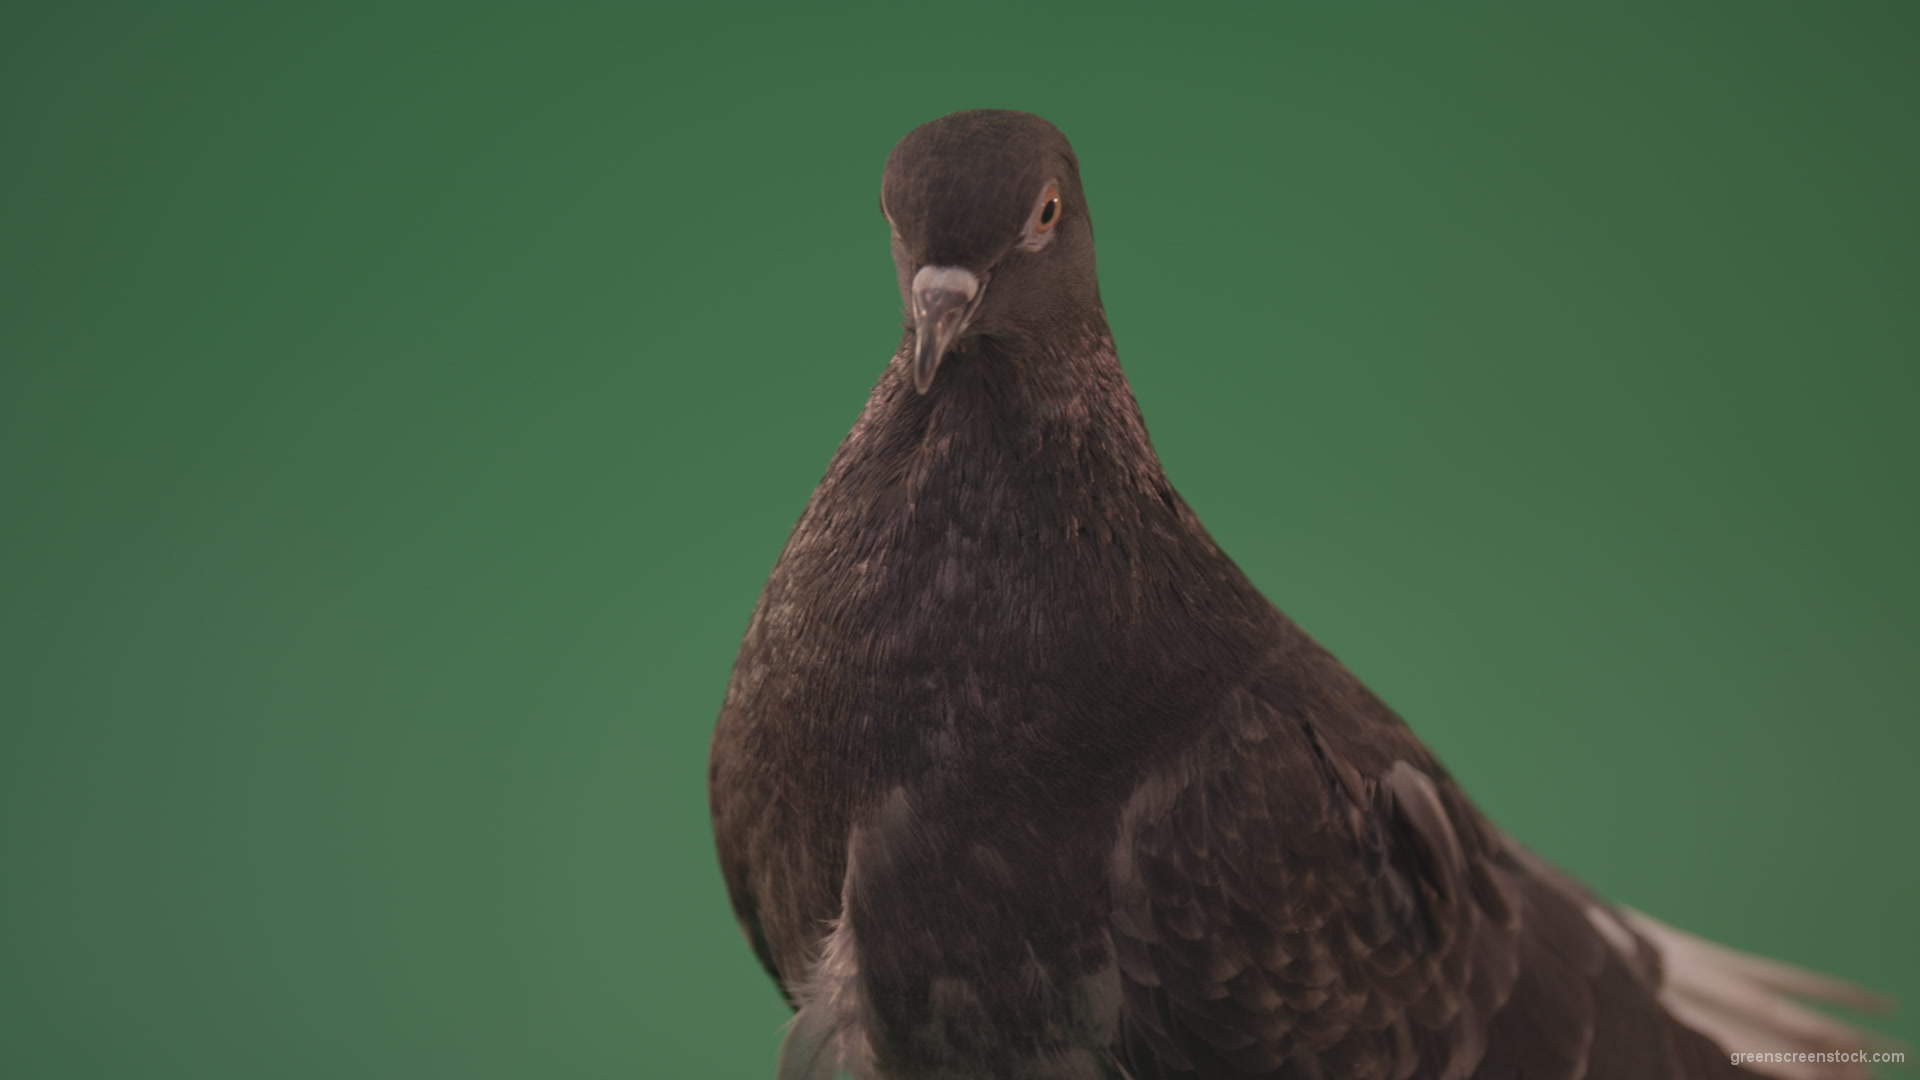 Gray-bird-of-mountain-origin-pigeon-strokes-its-lush-feathers-isolated-in-green-screen-studio_006 Green Screen Stock